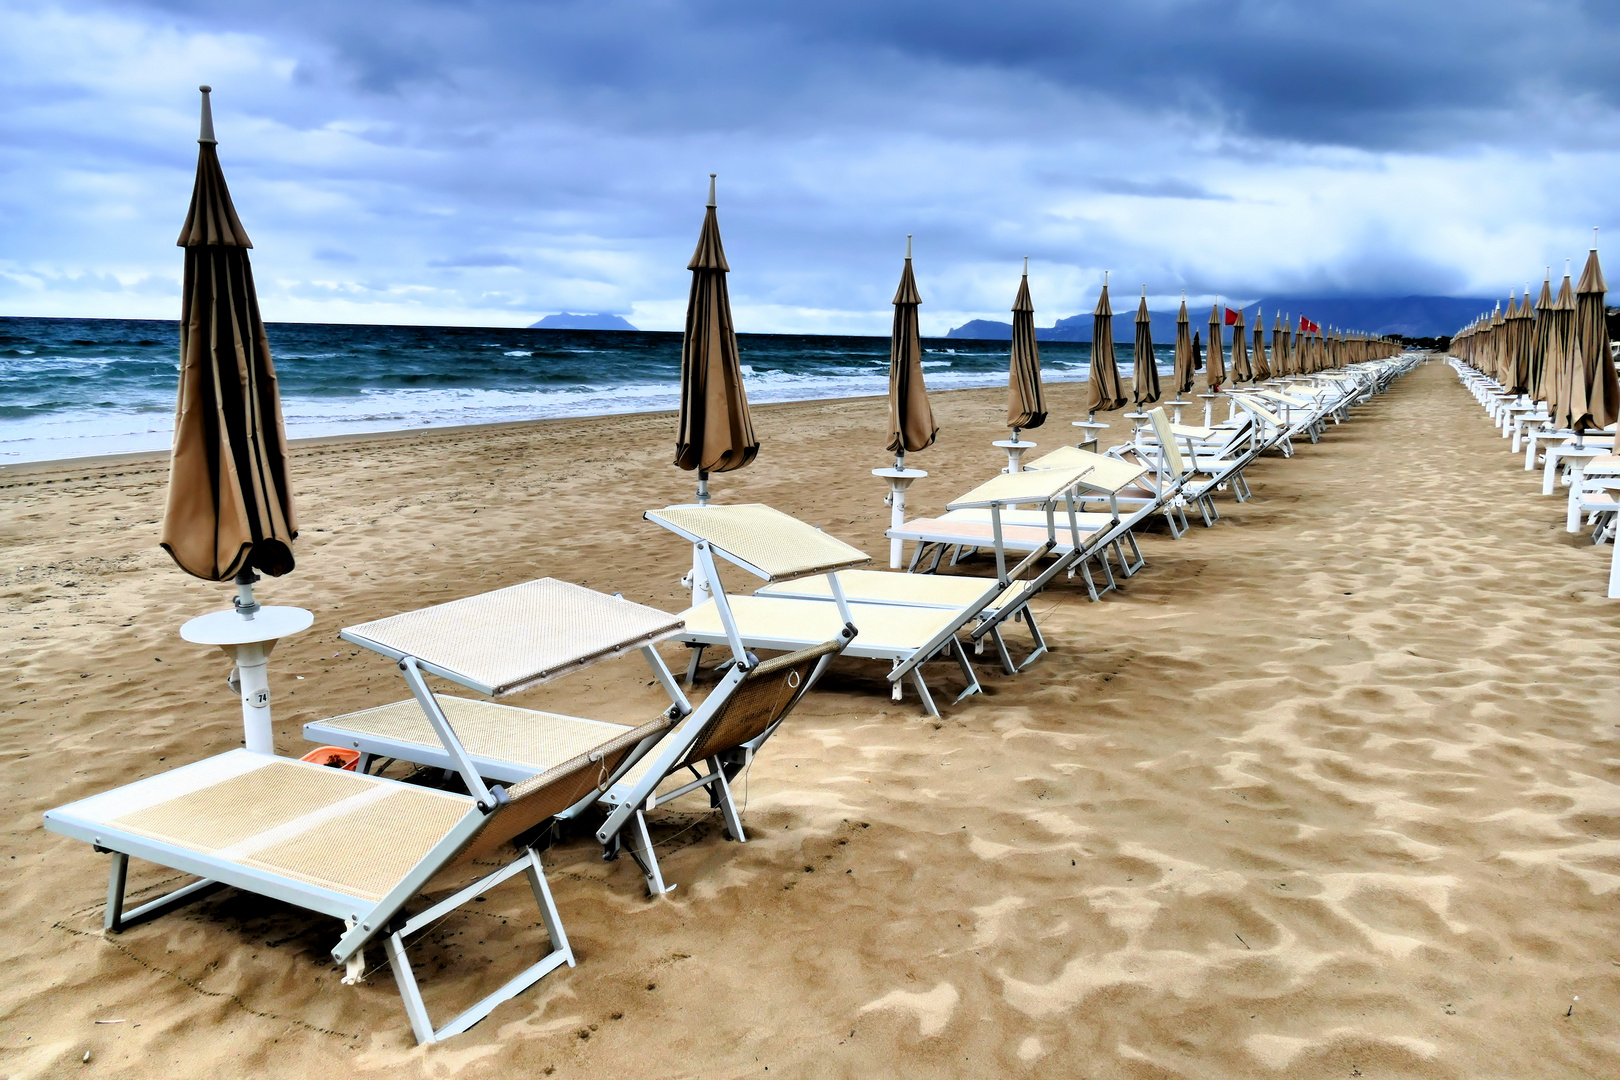 Bei schlechtem Wetter in Sperlonga in Italien bleibt der Strand leer